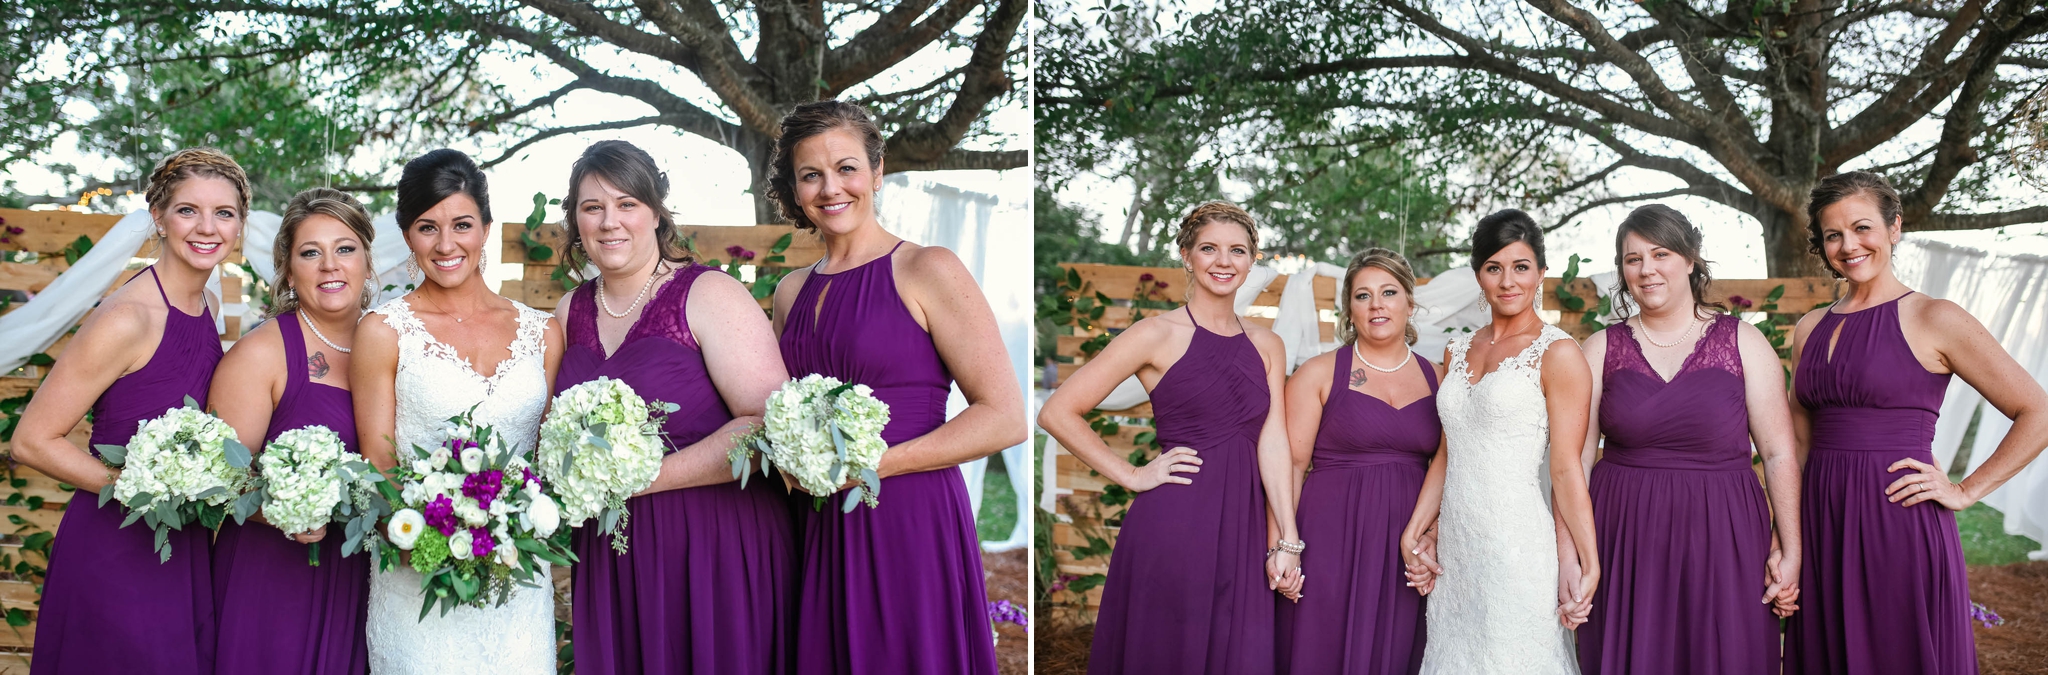  Alison + Thomas - Wilmington, North Carolina Wedding Photographer 